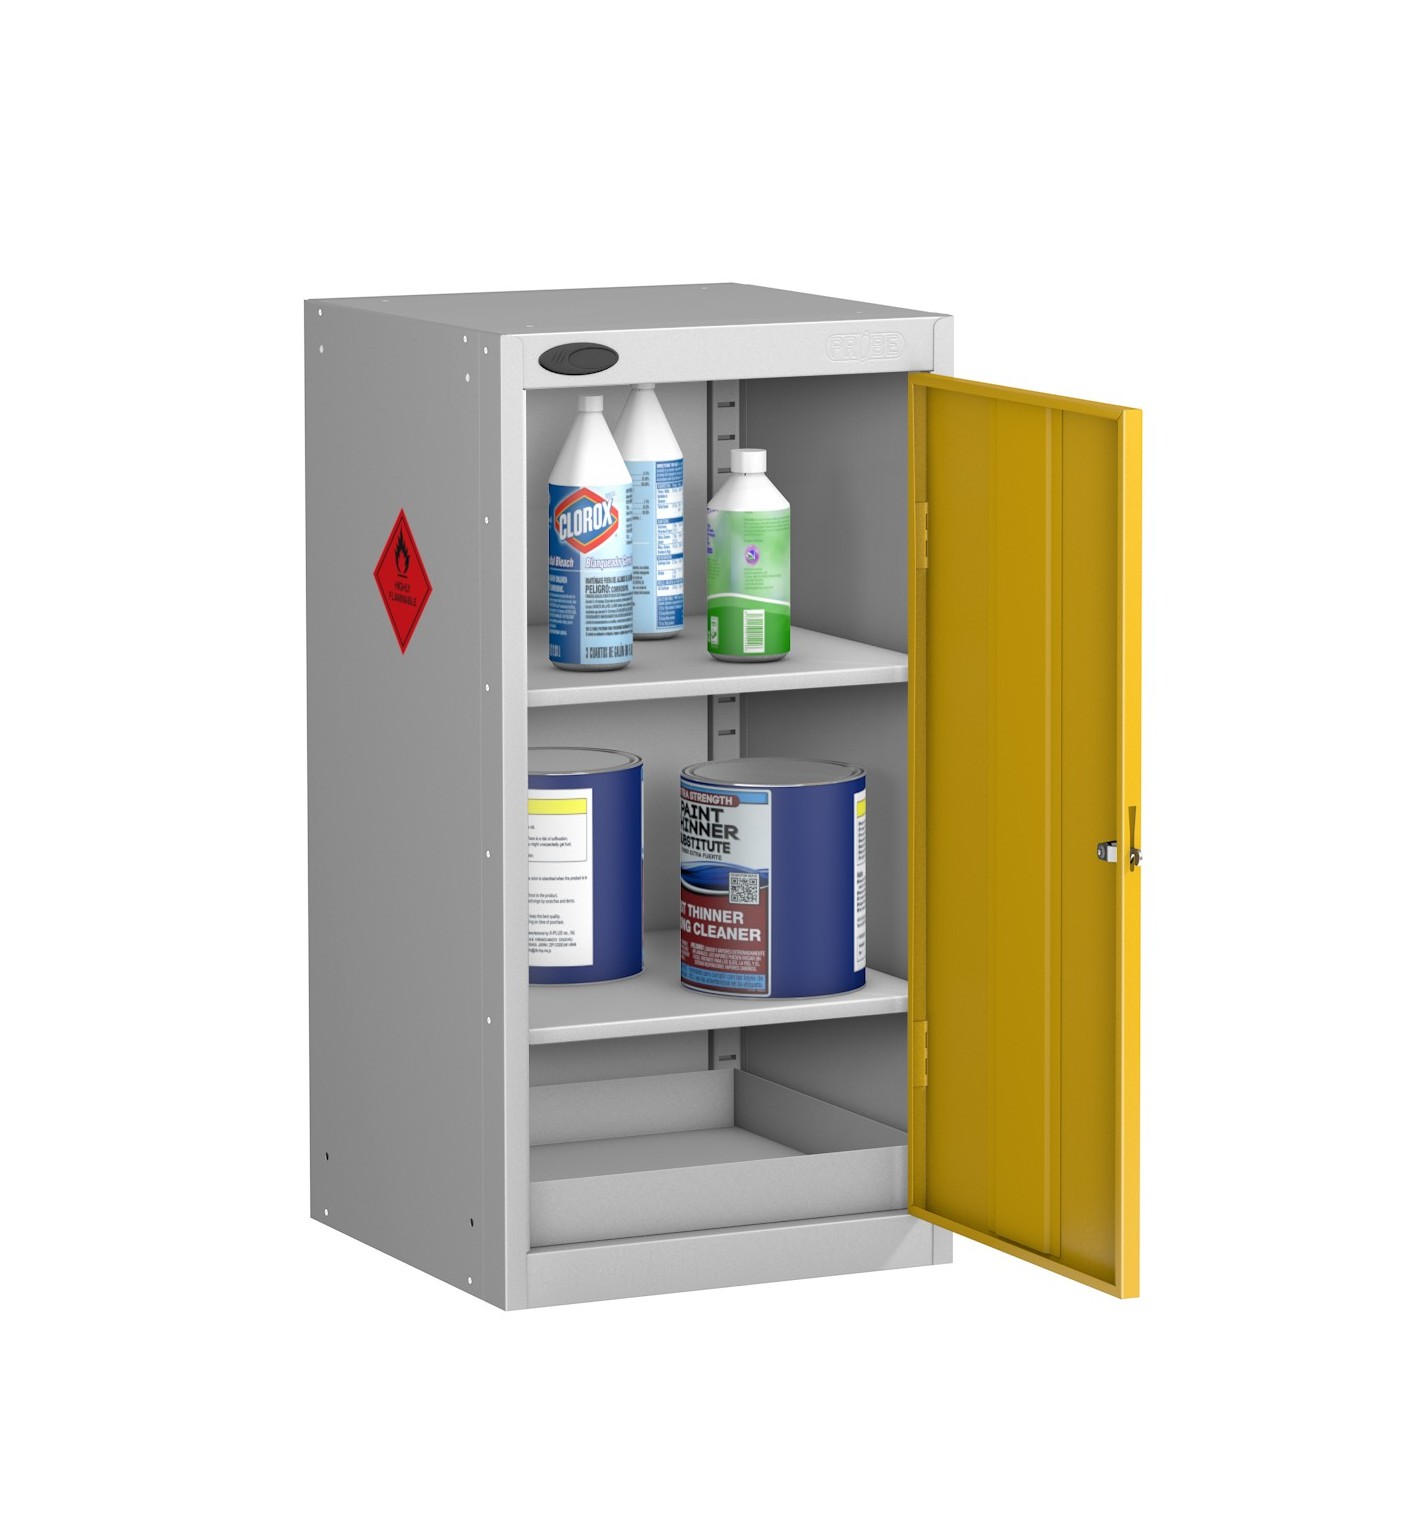 Small Hazardous Cabinet